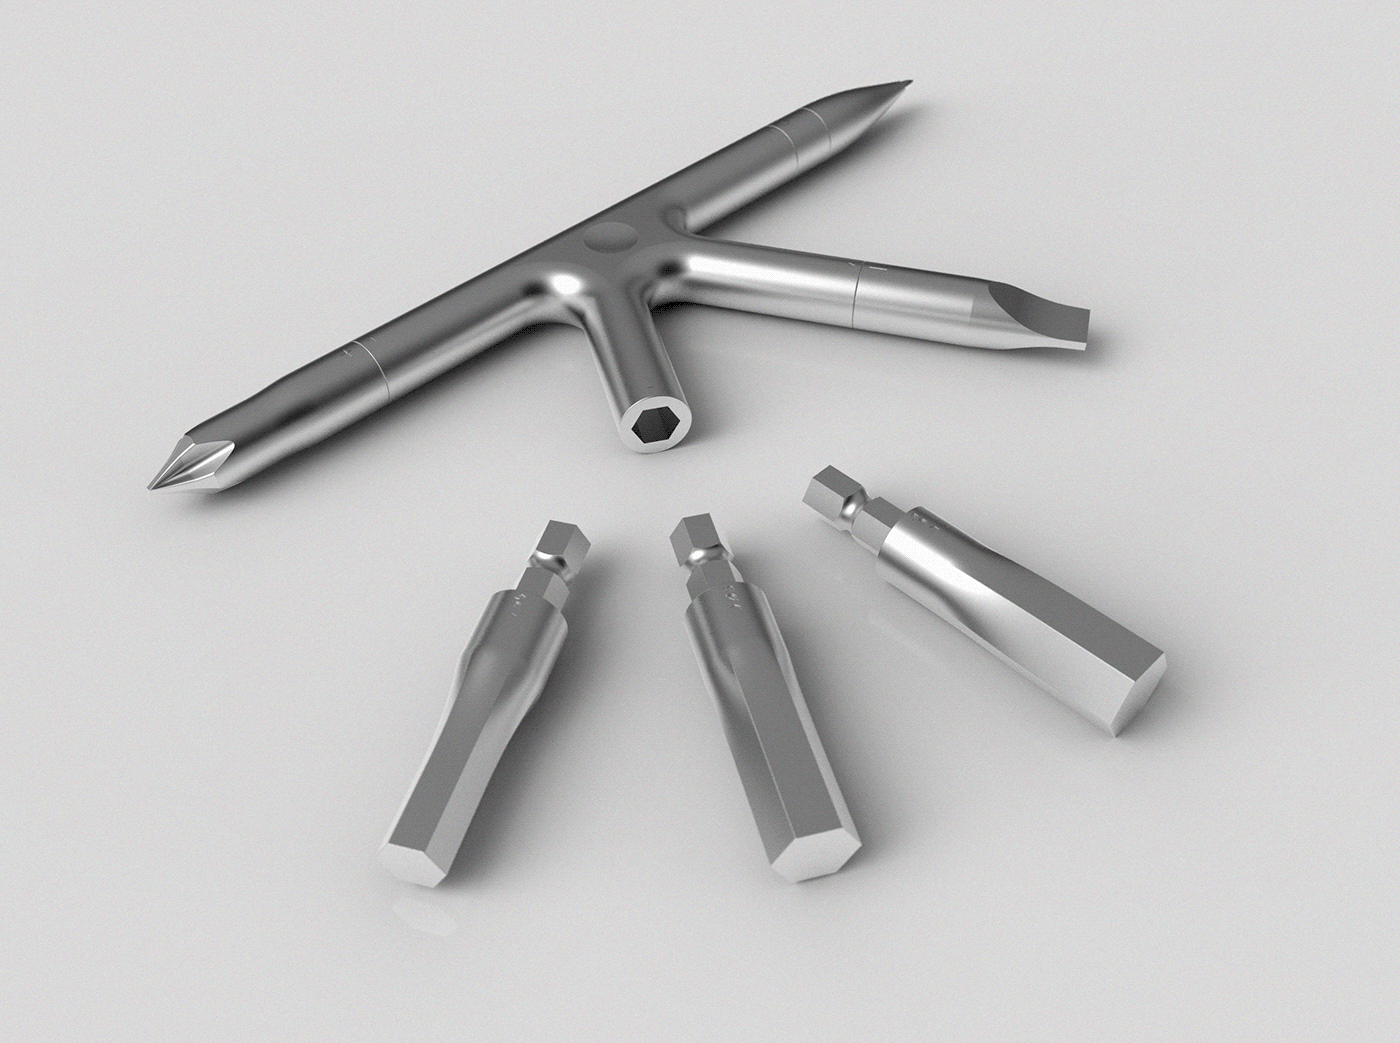 multi-tool tool modular product product design 